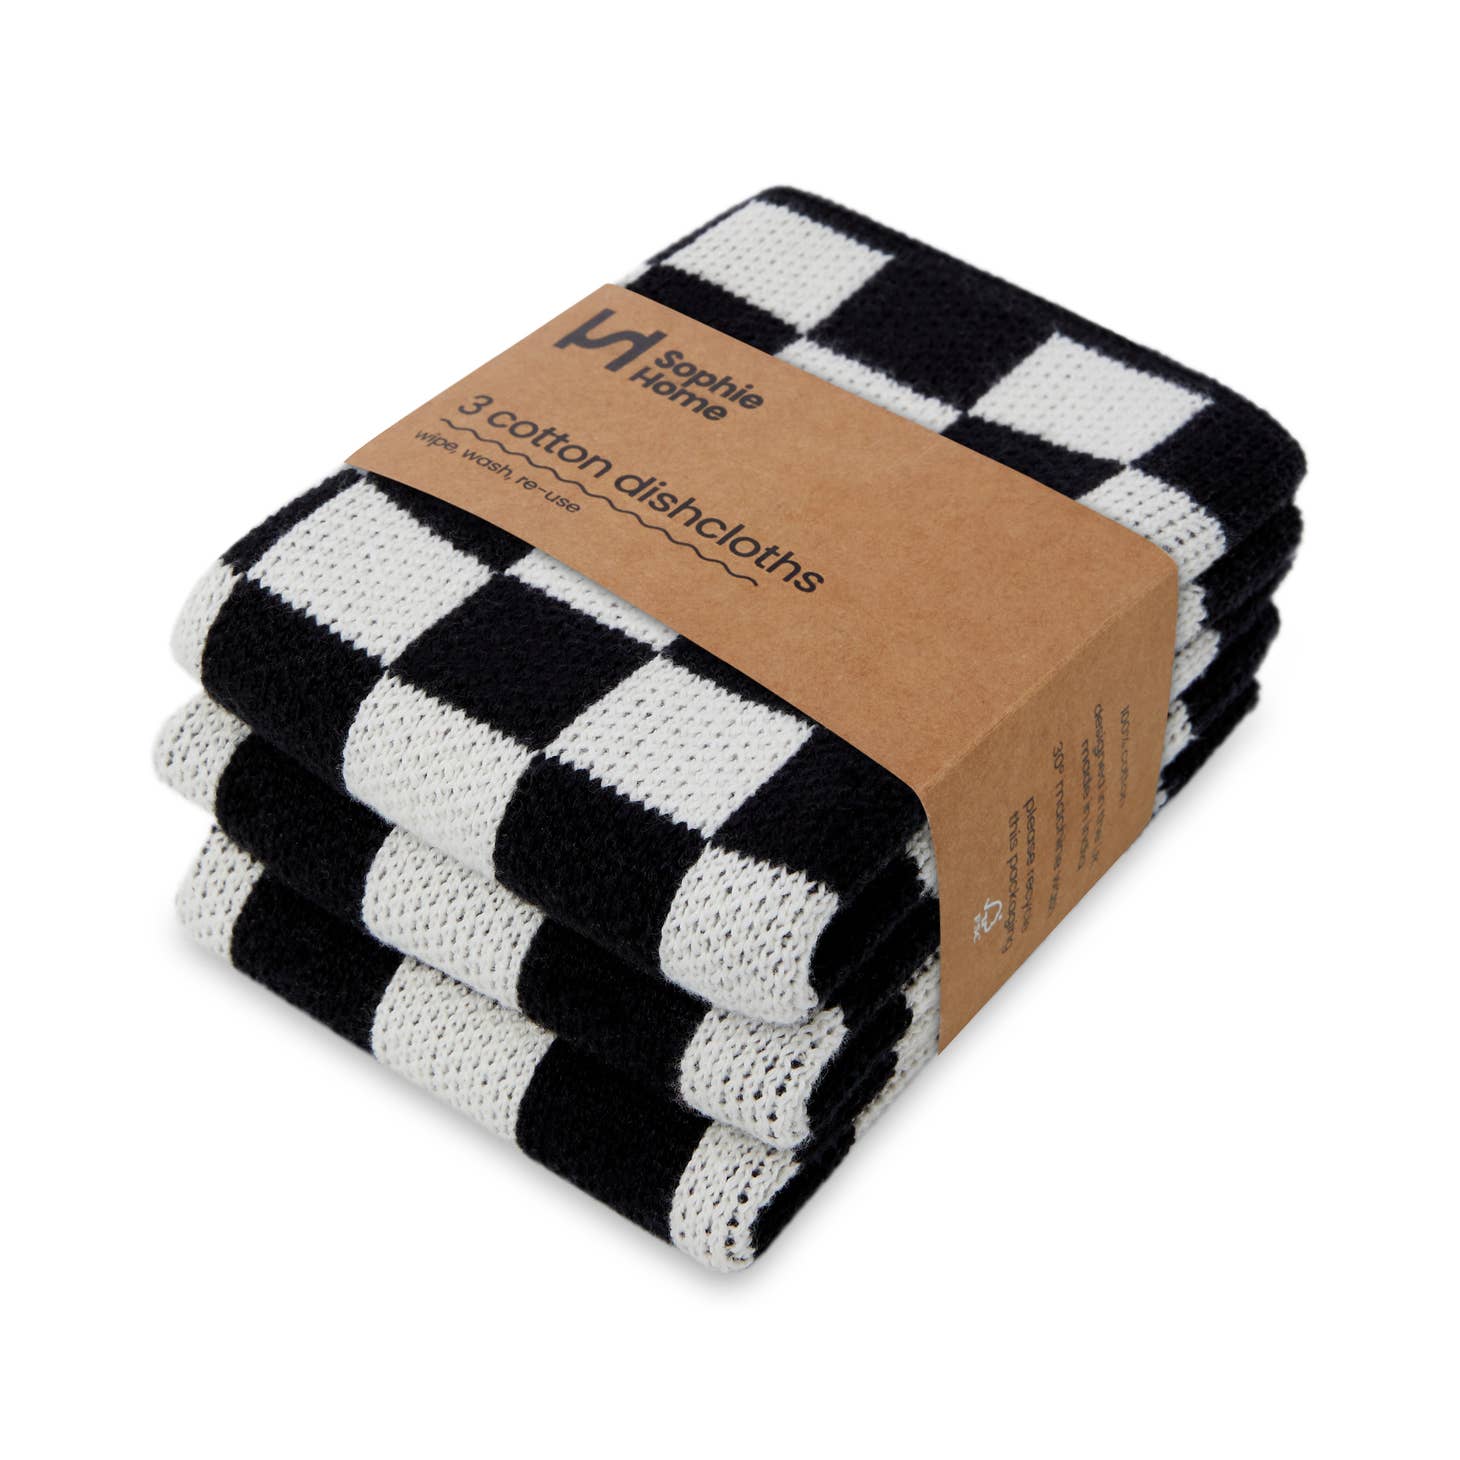 Sophie Home Reusable & Eco-Friendly Cotton Knit Dishcloths - Check Black